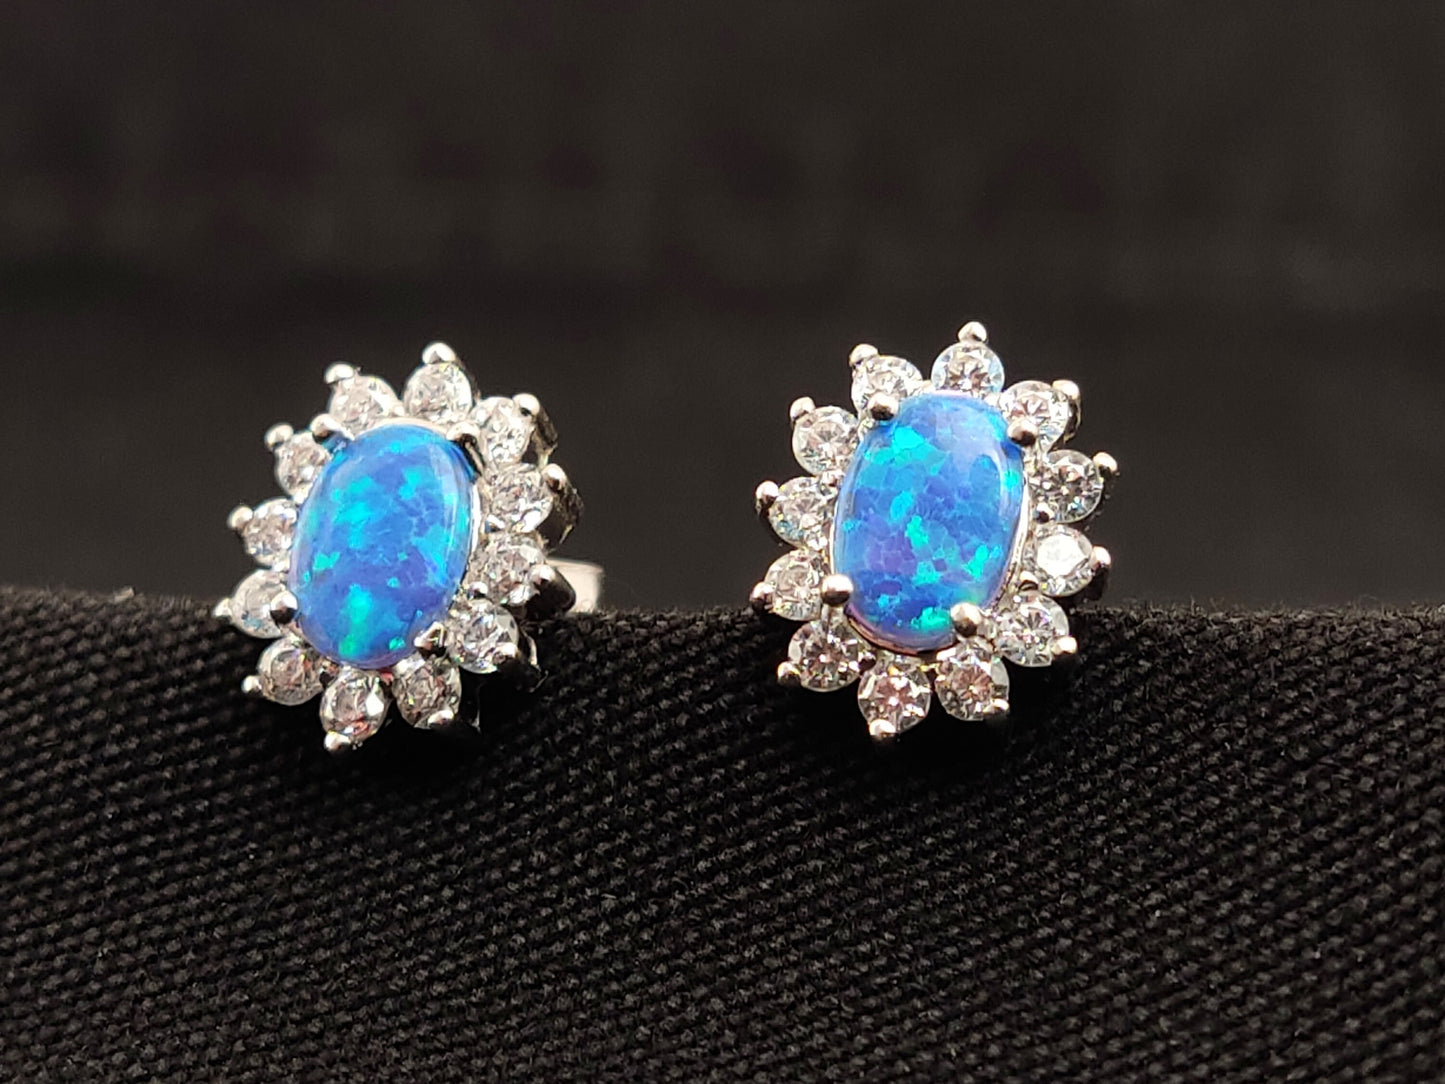 Sterling Silver 925 Oval Rosetta Blue Opal Small Stud Earrings 9x10mm, Opal Crystals Earrings, Griechisches Silber Ohrringe  Bijoux Grecque